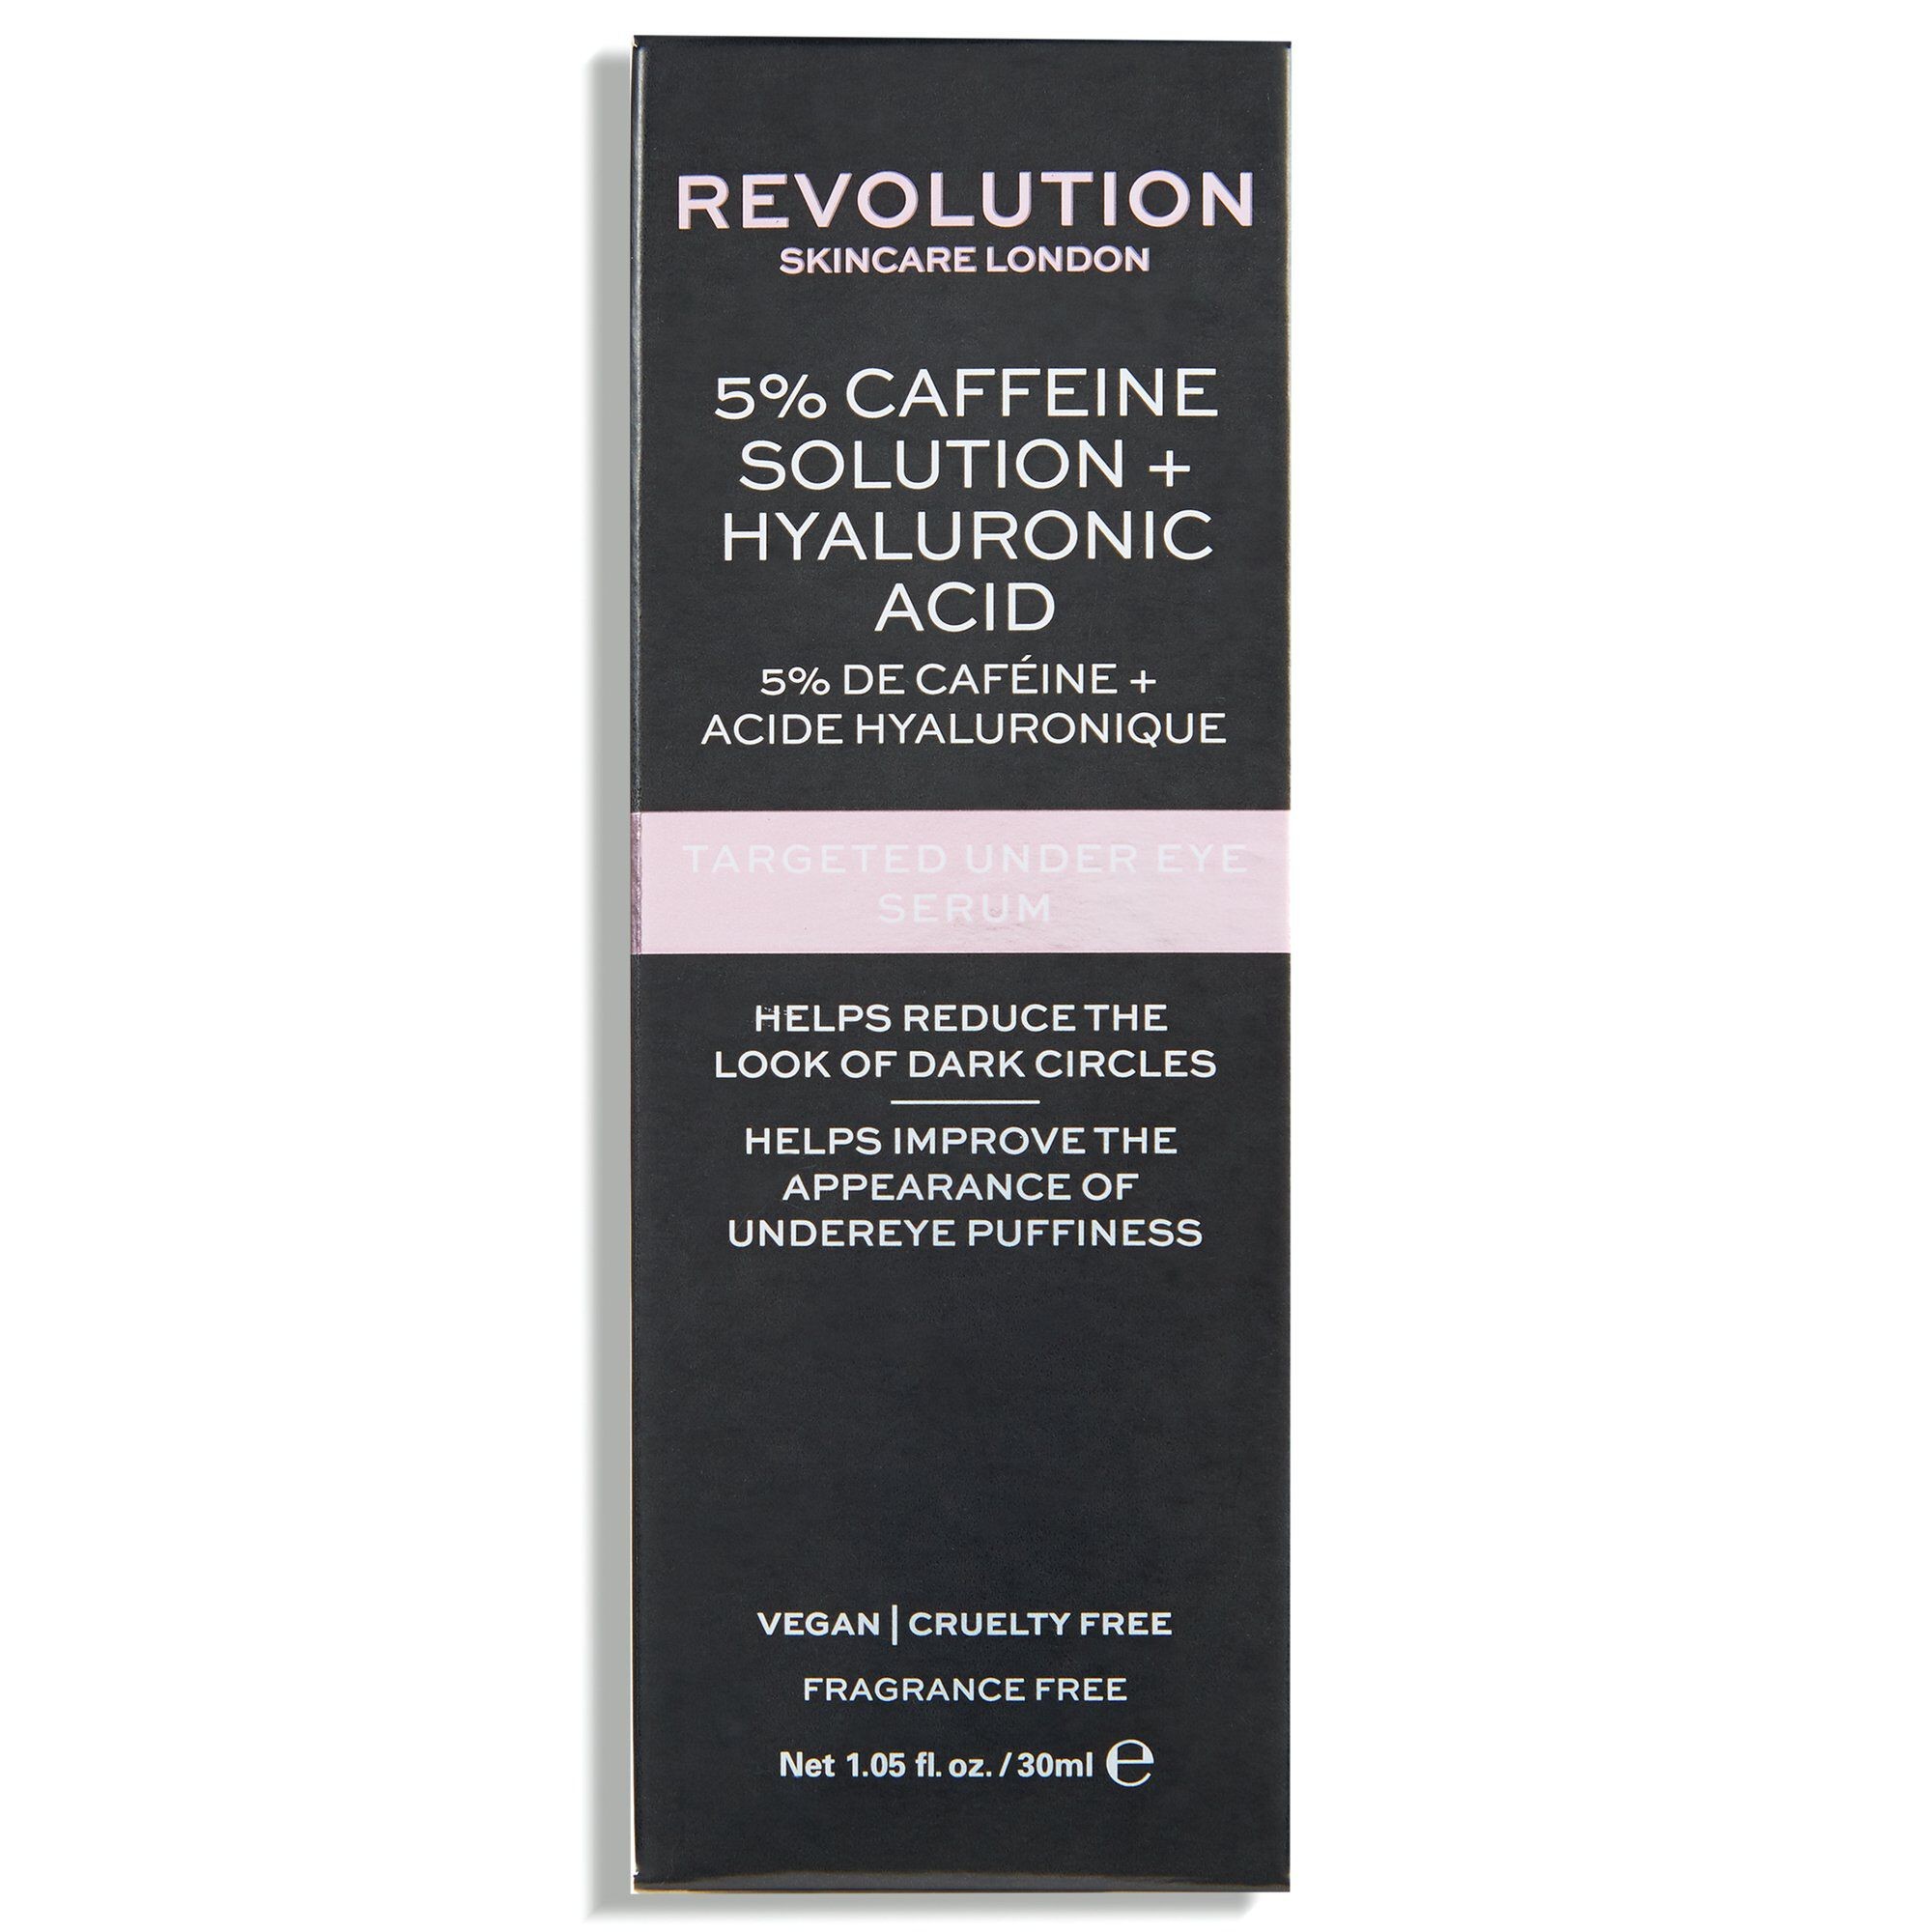 Targeted Under Eye Serum - 5% Caffeine Solution + Hyaluronic Acid